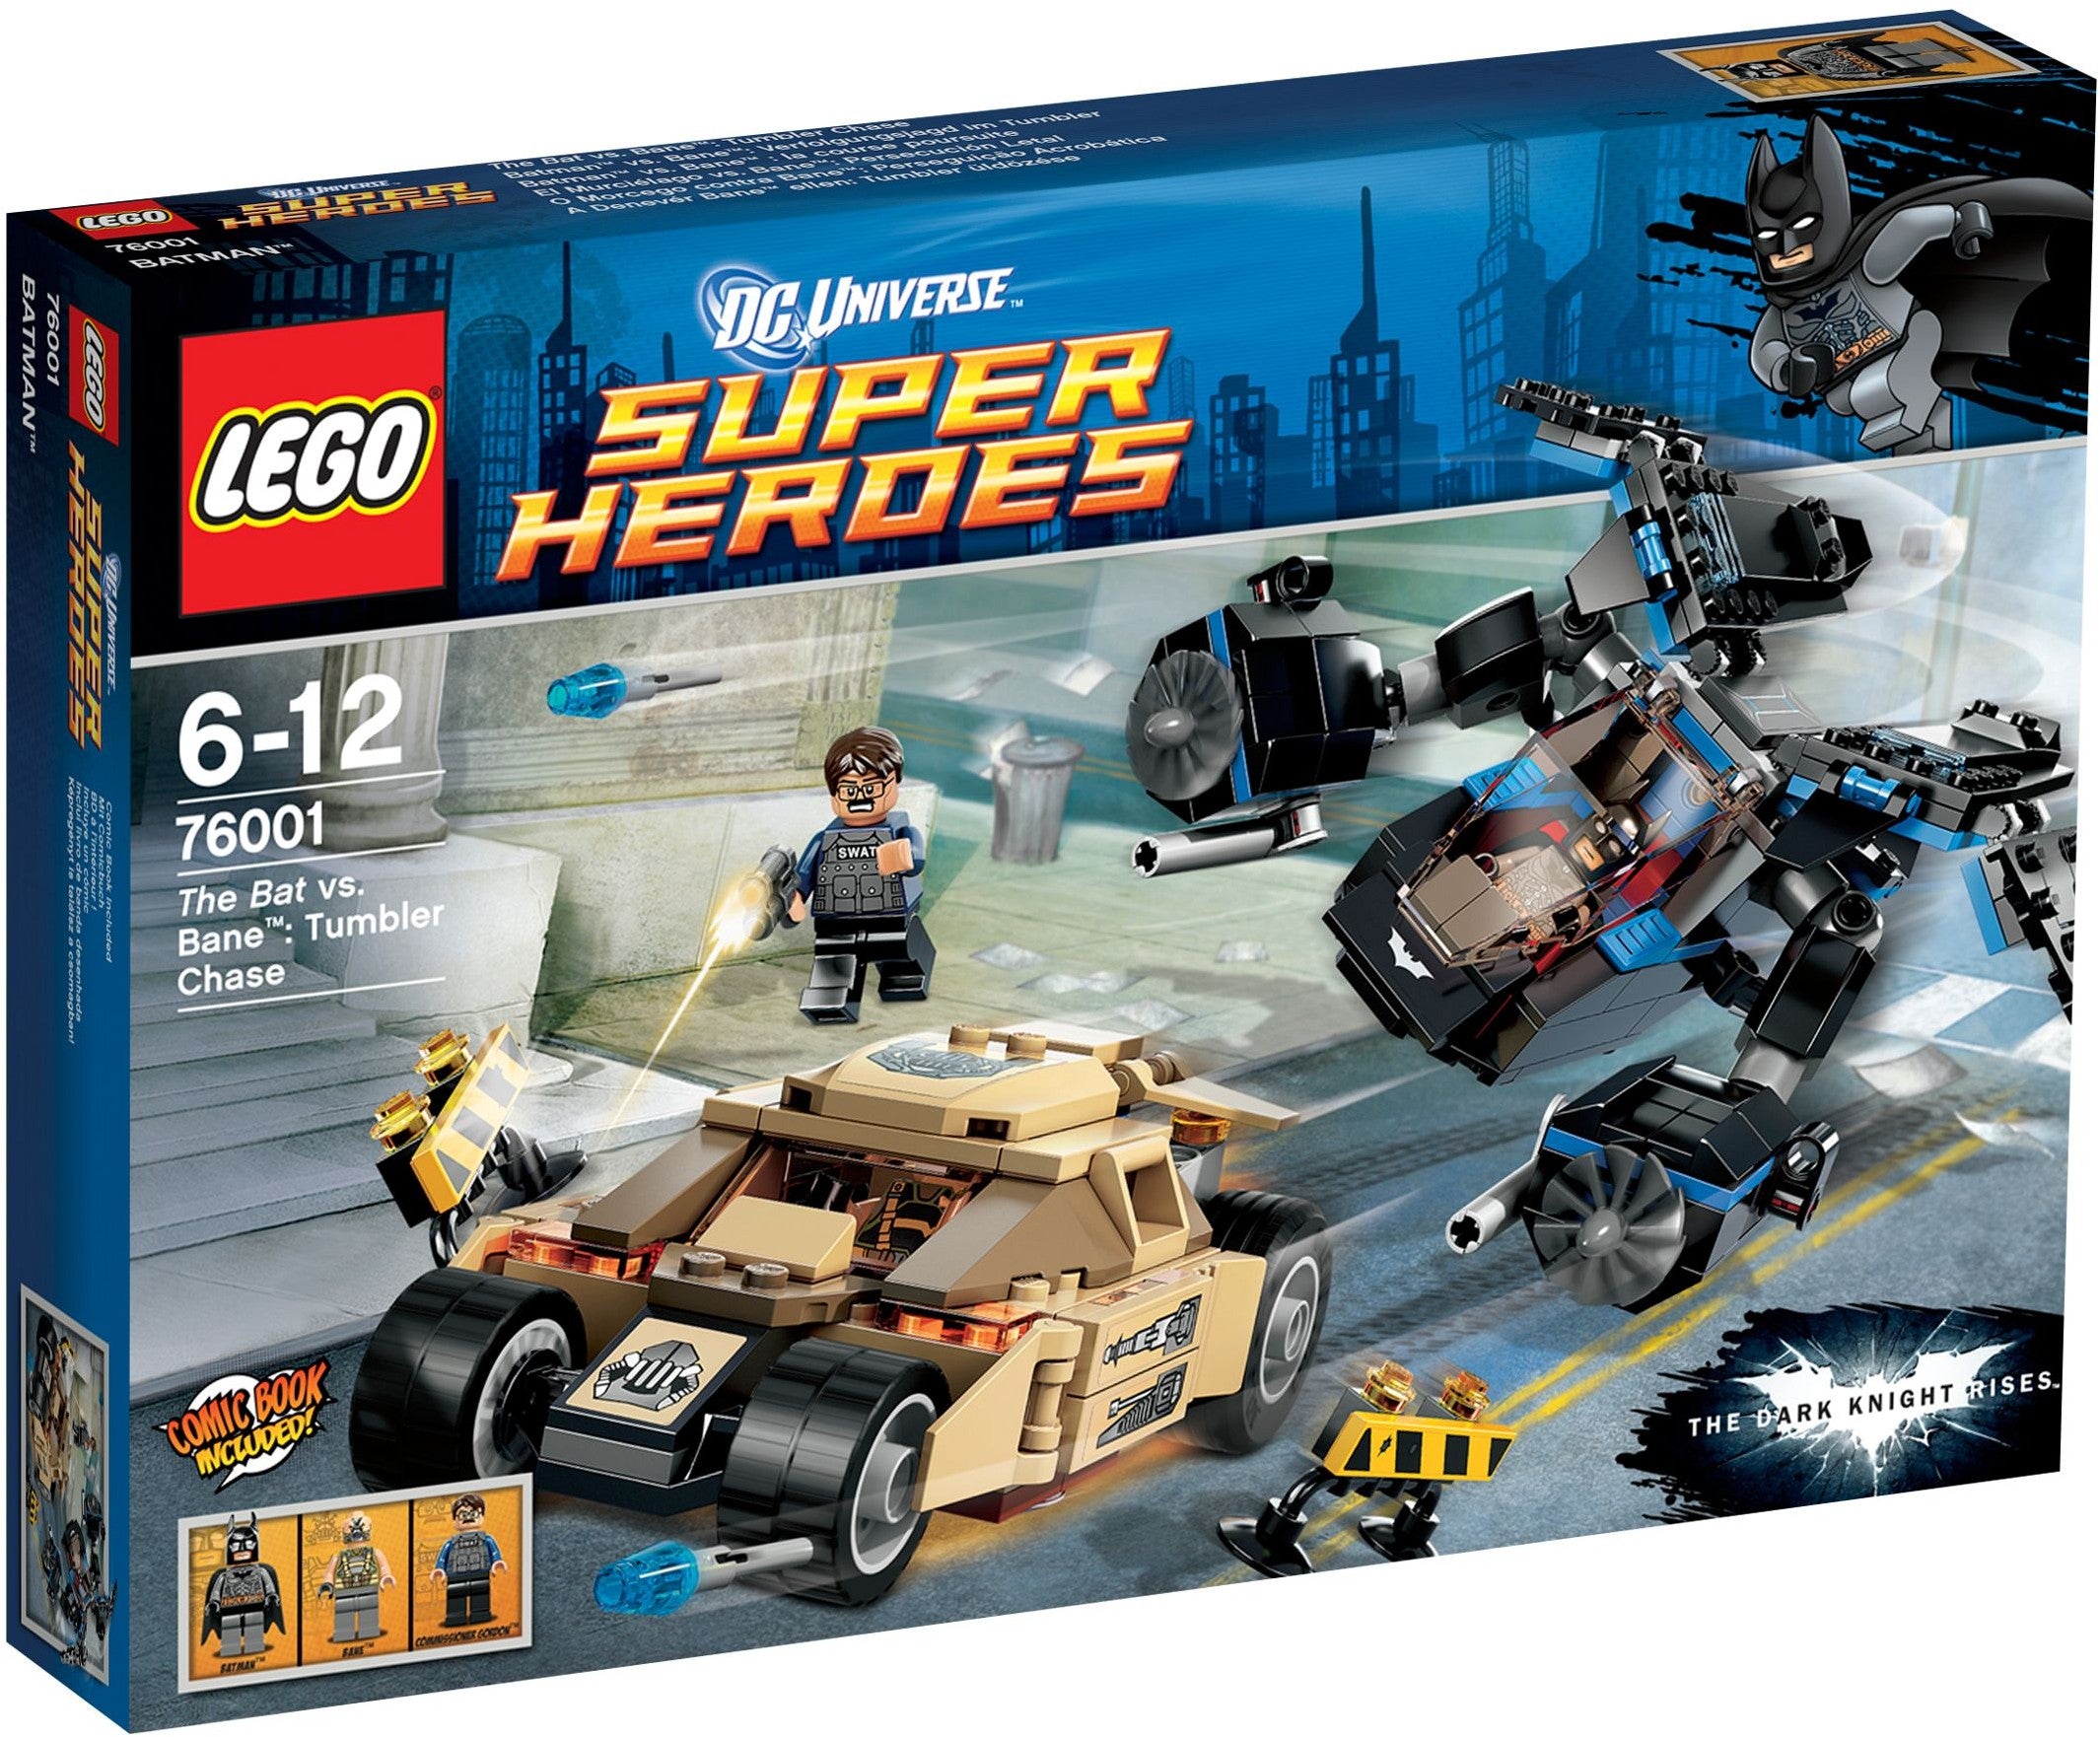 Lego Super Heroes 76001 - The Bat vs. Bane: Tumbler Chase